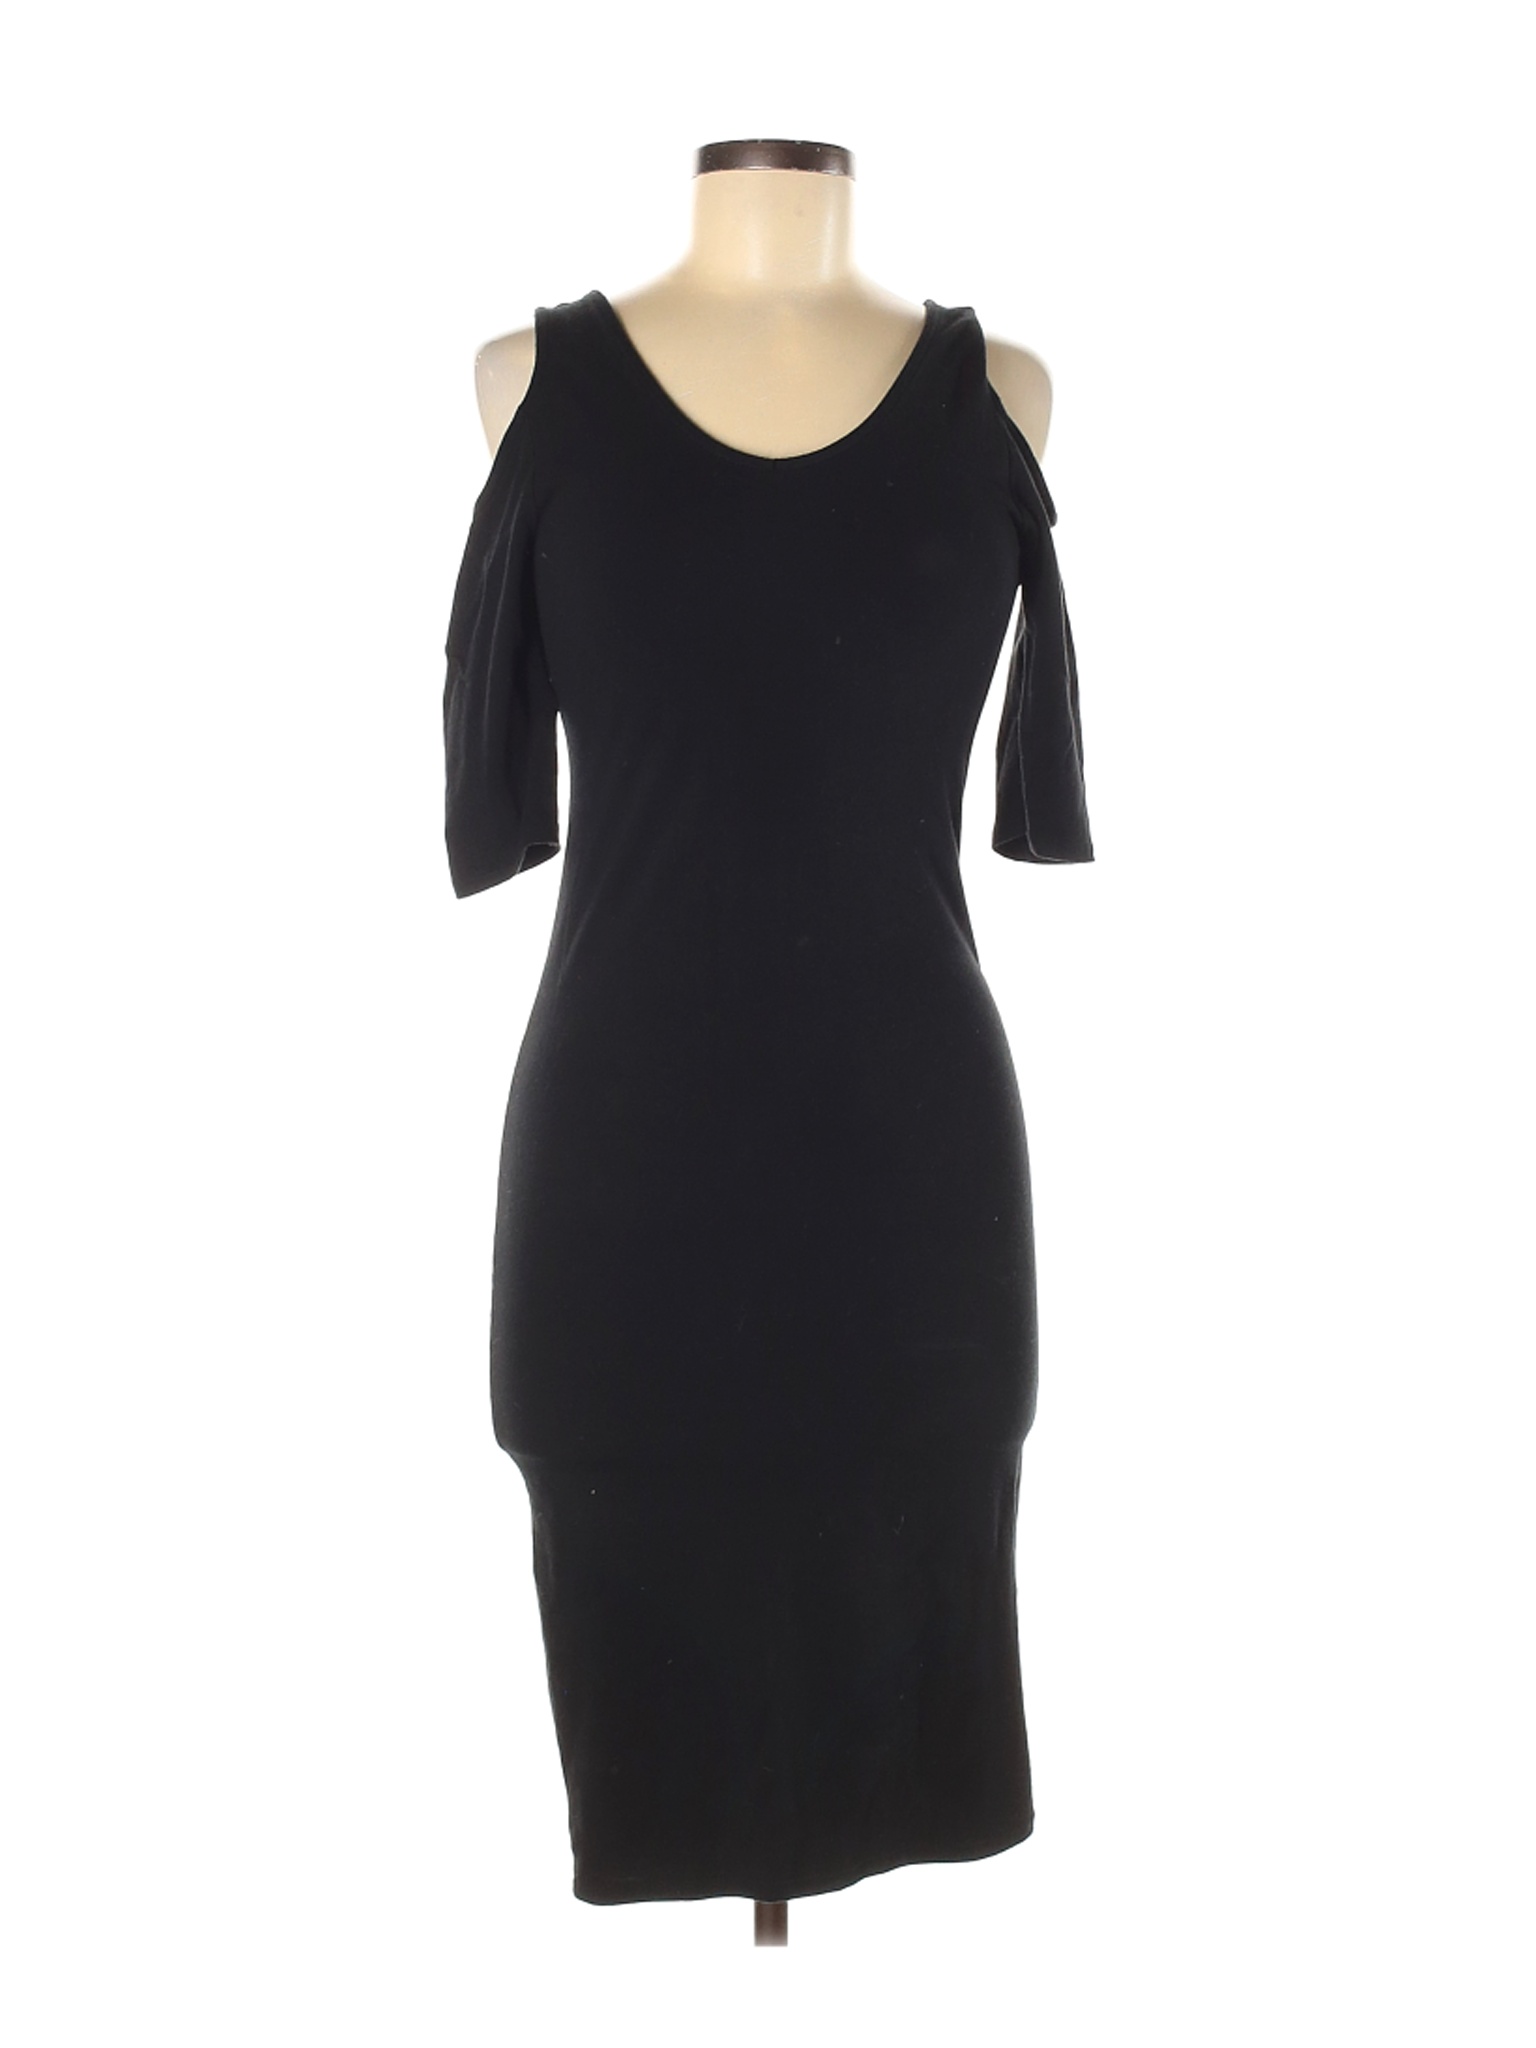 Zenana Outfitters Women Black Casual Dress M | eBay